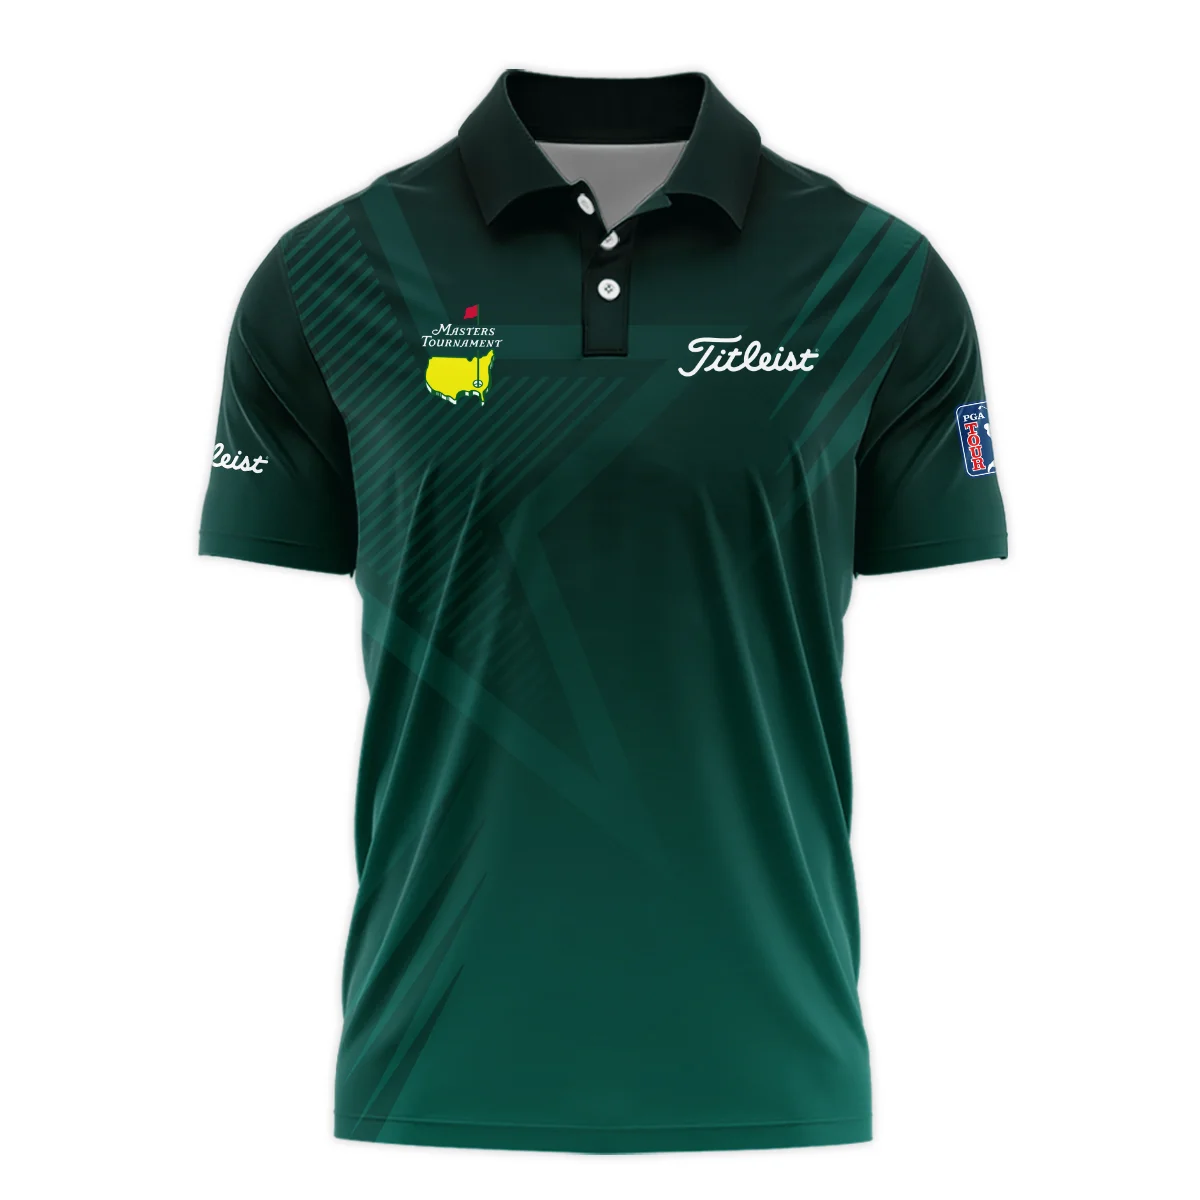 Sports Titleist Masters Tournament Unisex T-Shirt Star Pattern Dark Green Gradient Golf T-Shirt